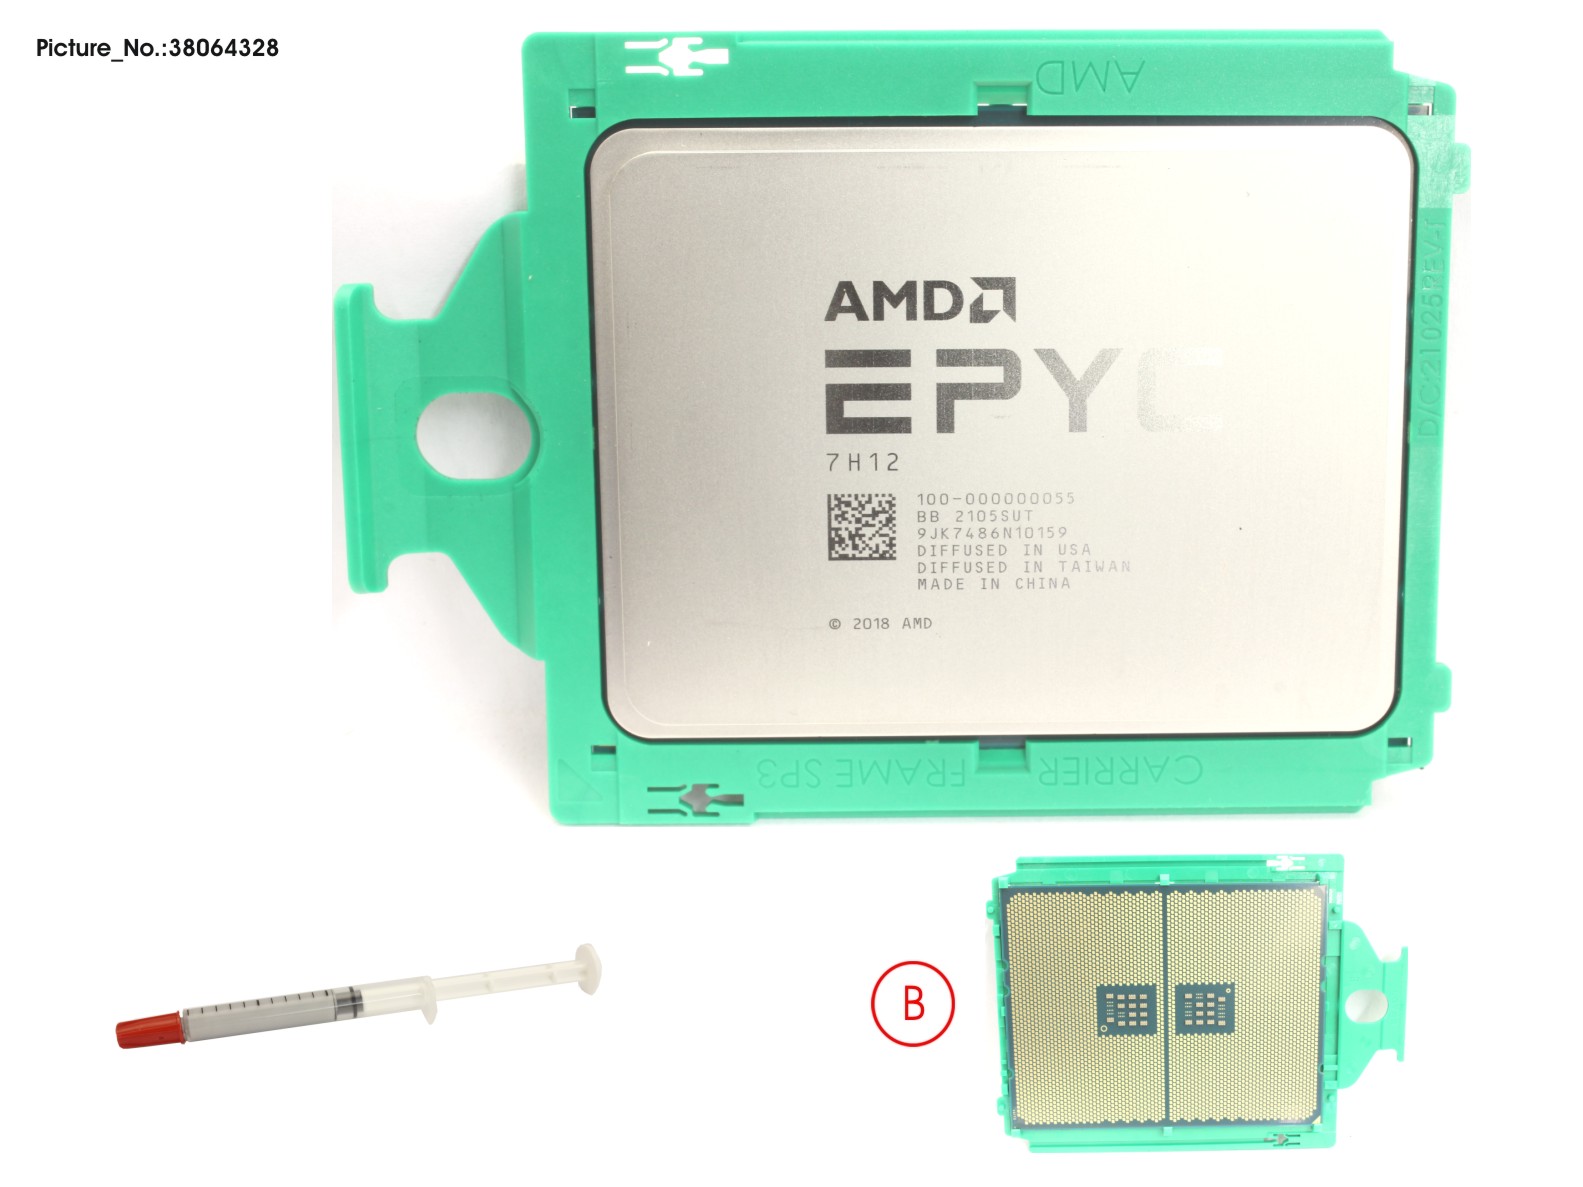 CPU SPARE AMD EPYC 7H12